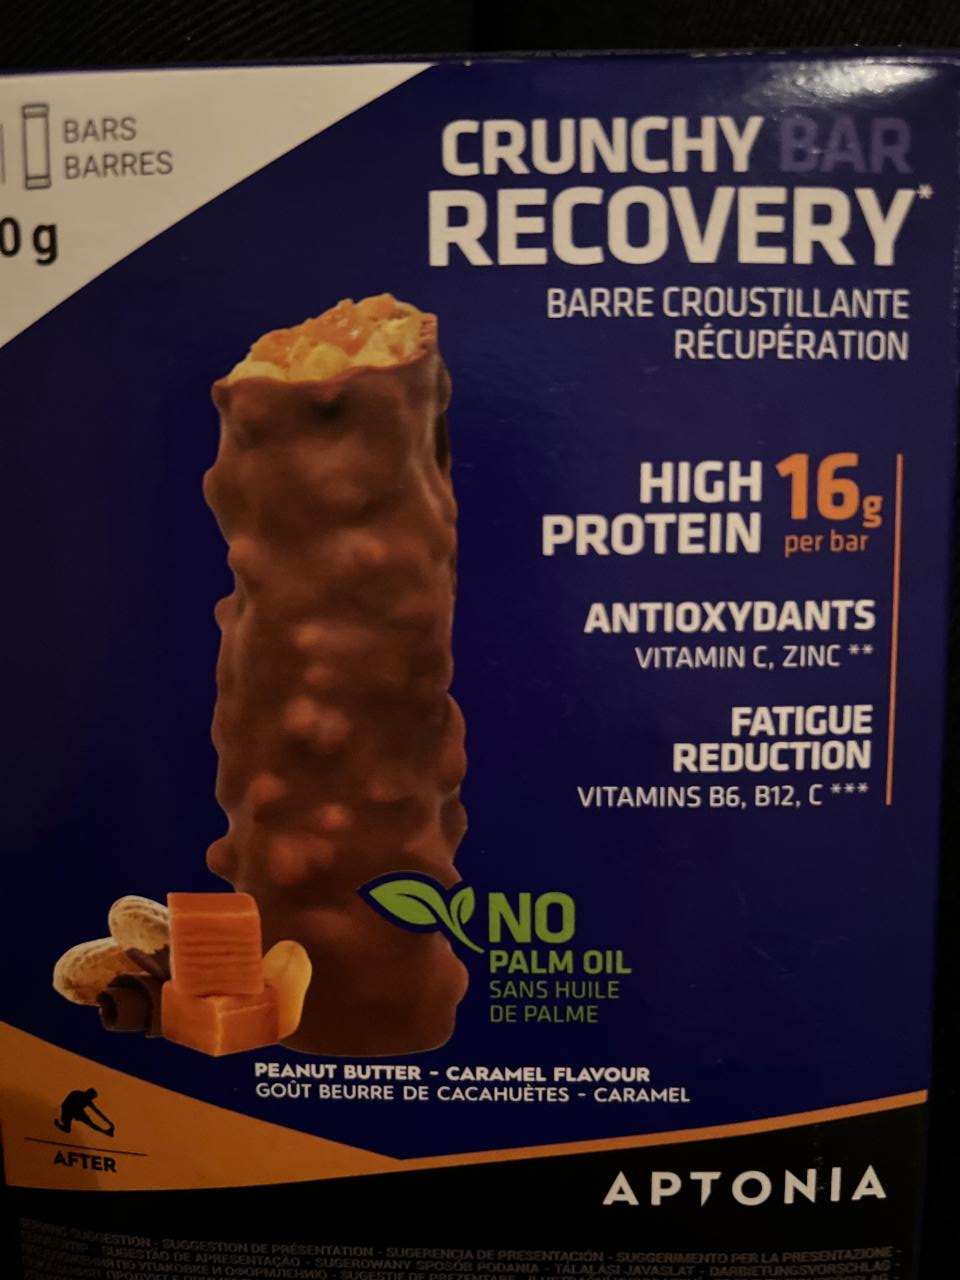 Fotografie - Crunchy Bar Recovery Peanut Butter - Caramel Flavour Aptonia